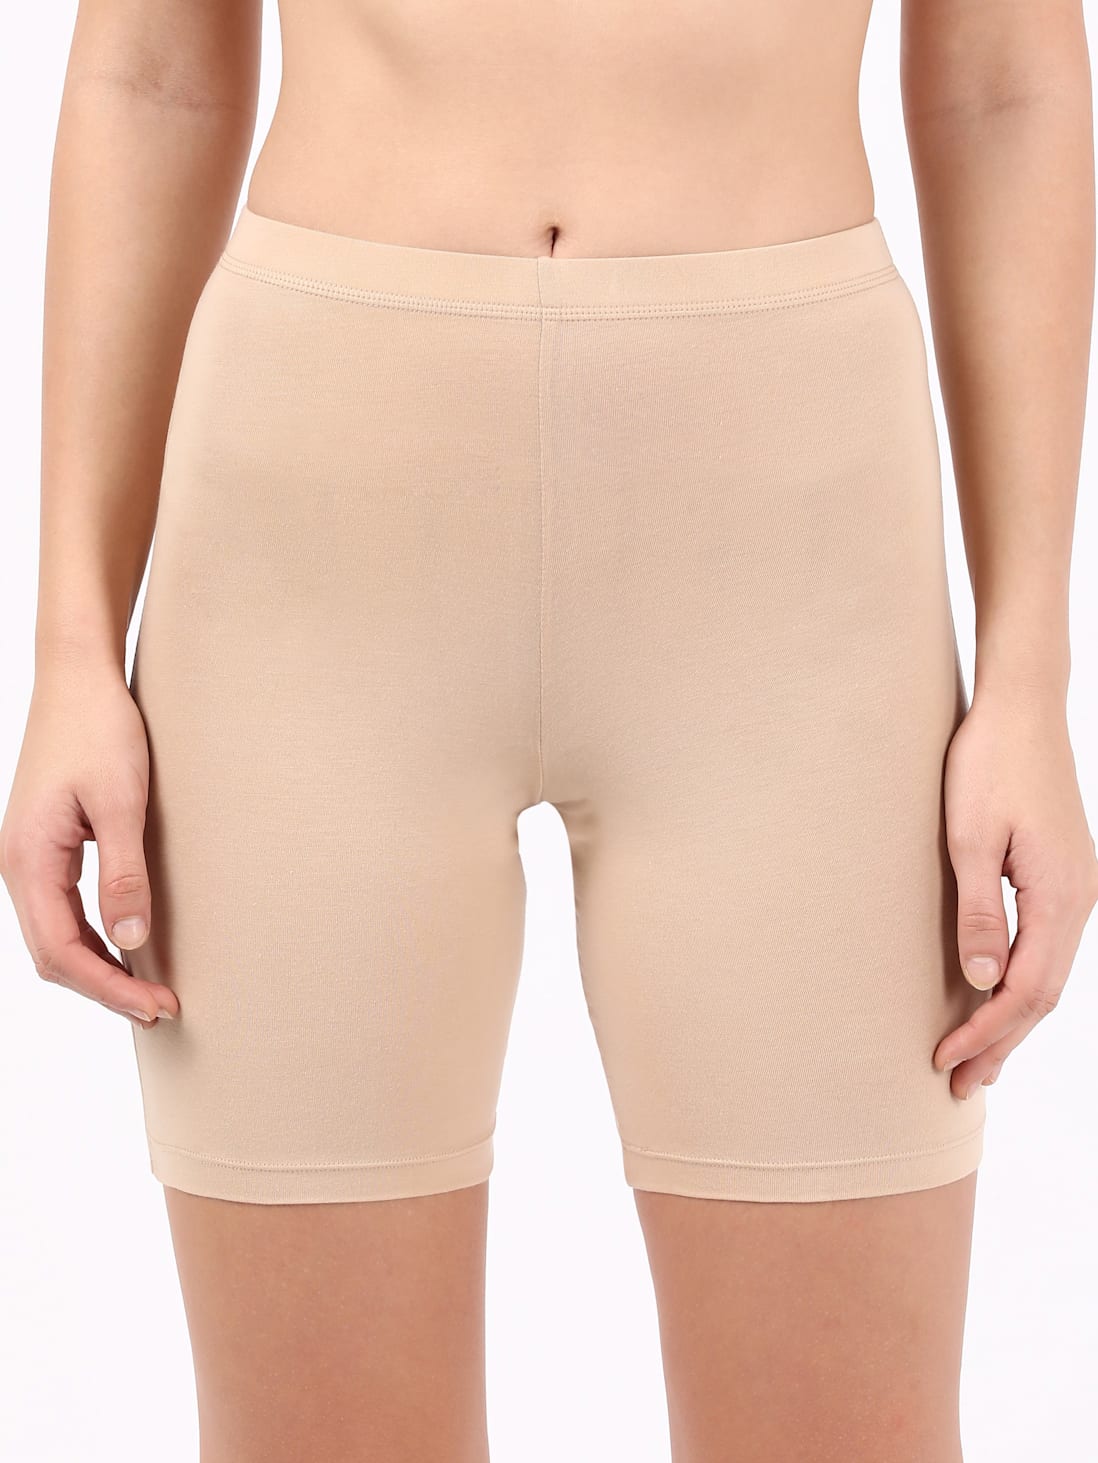 Buy Jockey Stretch Capri Pants Grey at Rs849 online  Activewear online